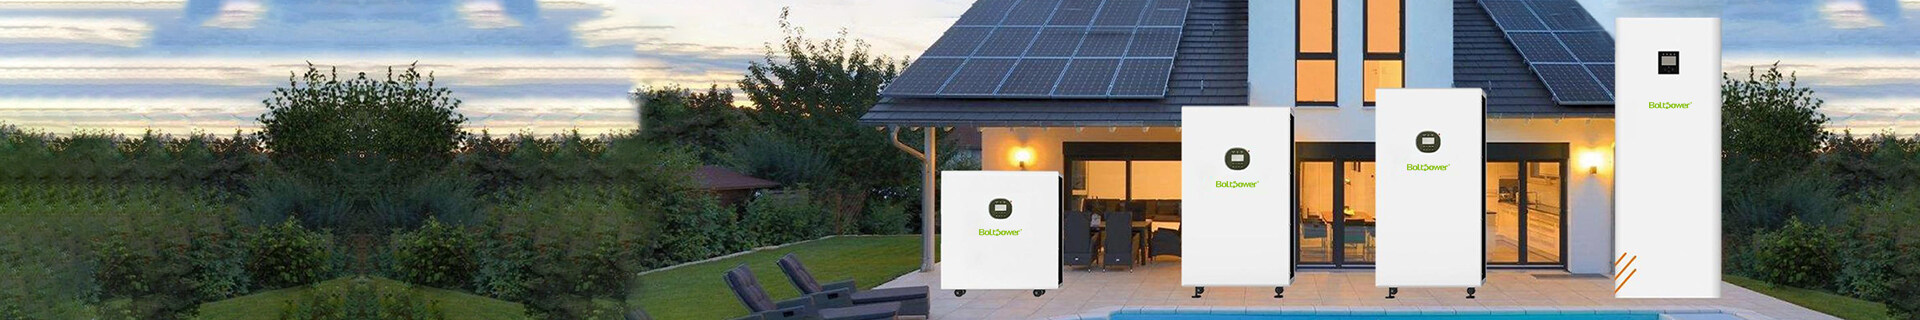 Armazenamento de bateria para solar residencial, sistemas de armazenamento de bateria solar residencial, sistemas solares residenciais com armazenamento de bateria, sistema de armazenamento de energia residencial, armazenamento de bateria solar residencial